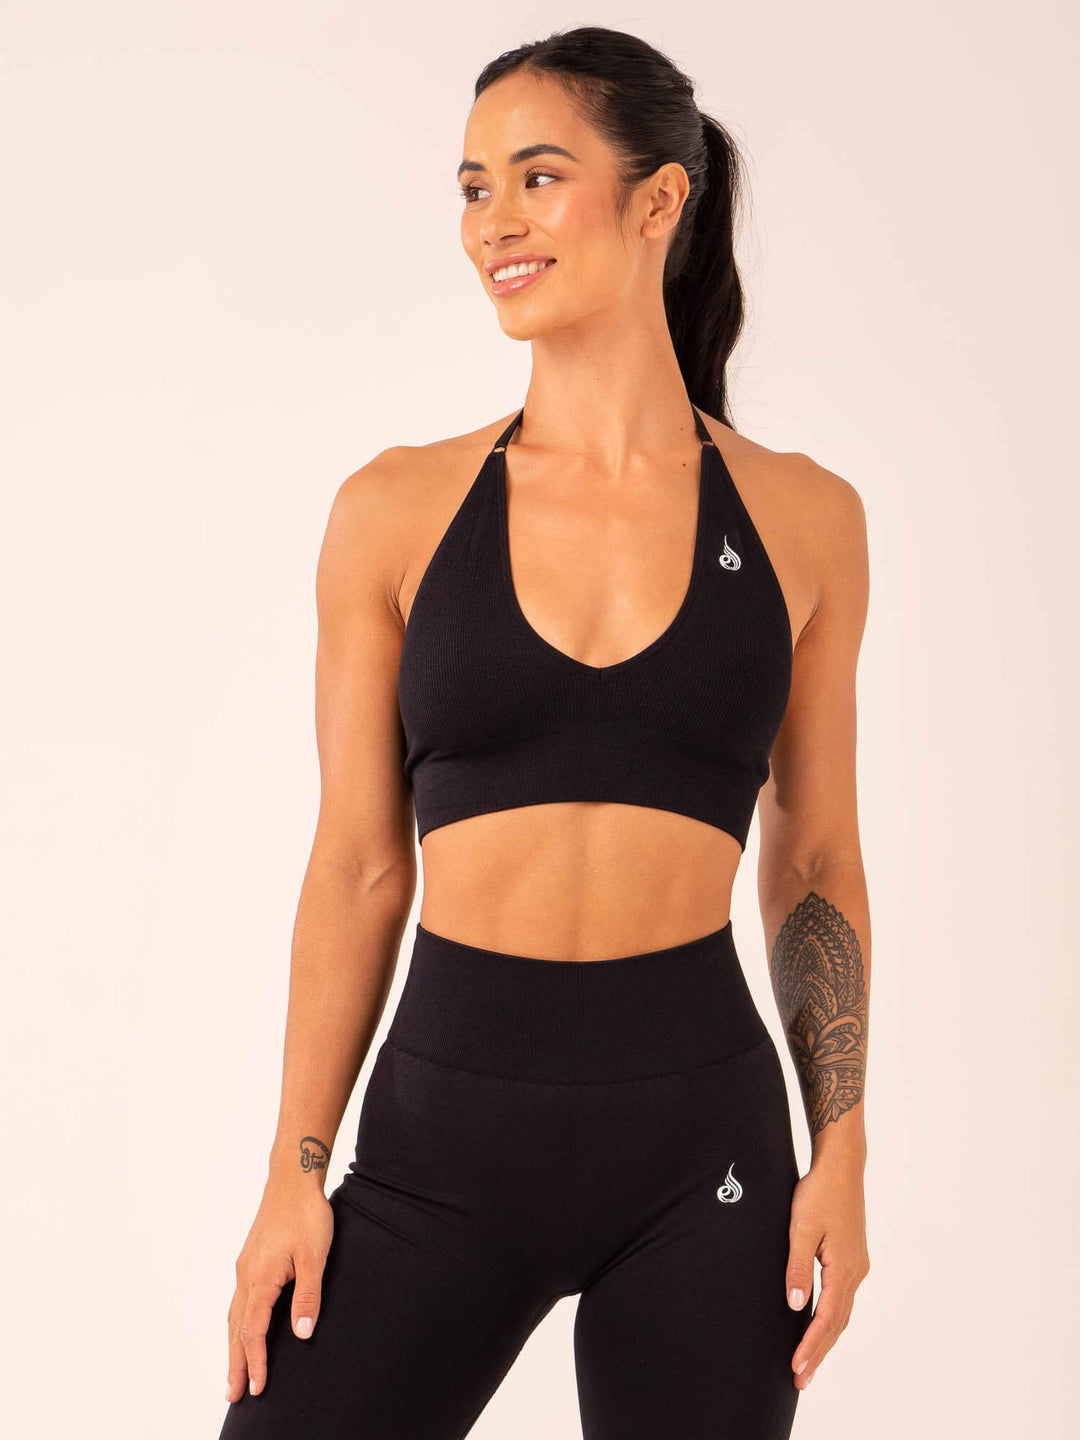 Hot Fitness Women's T-shirts Workout Sports Bra Yoga Vest